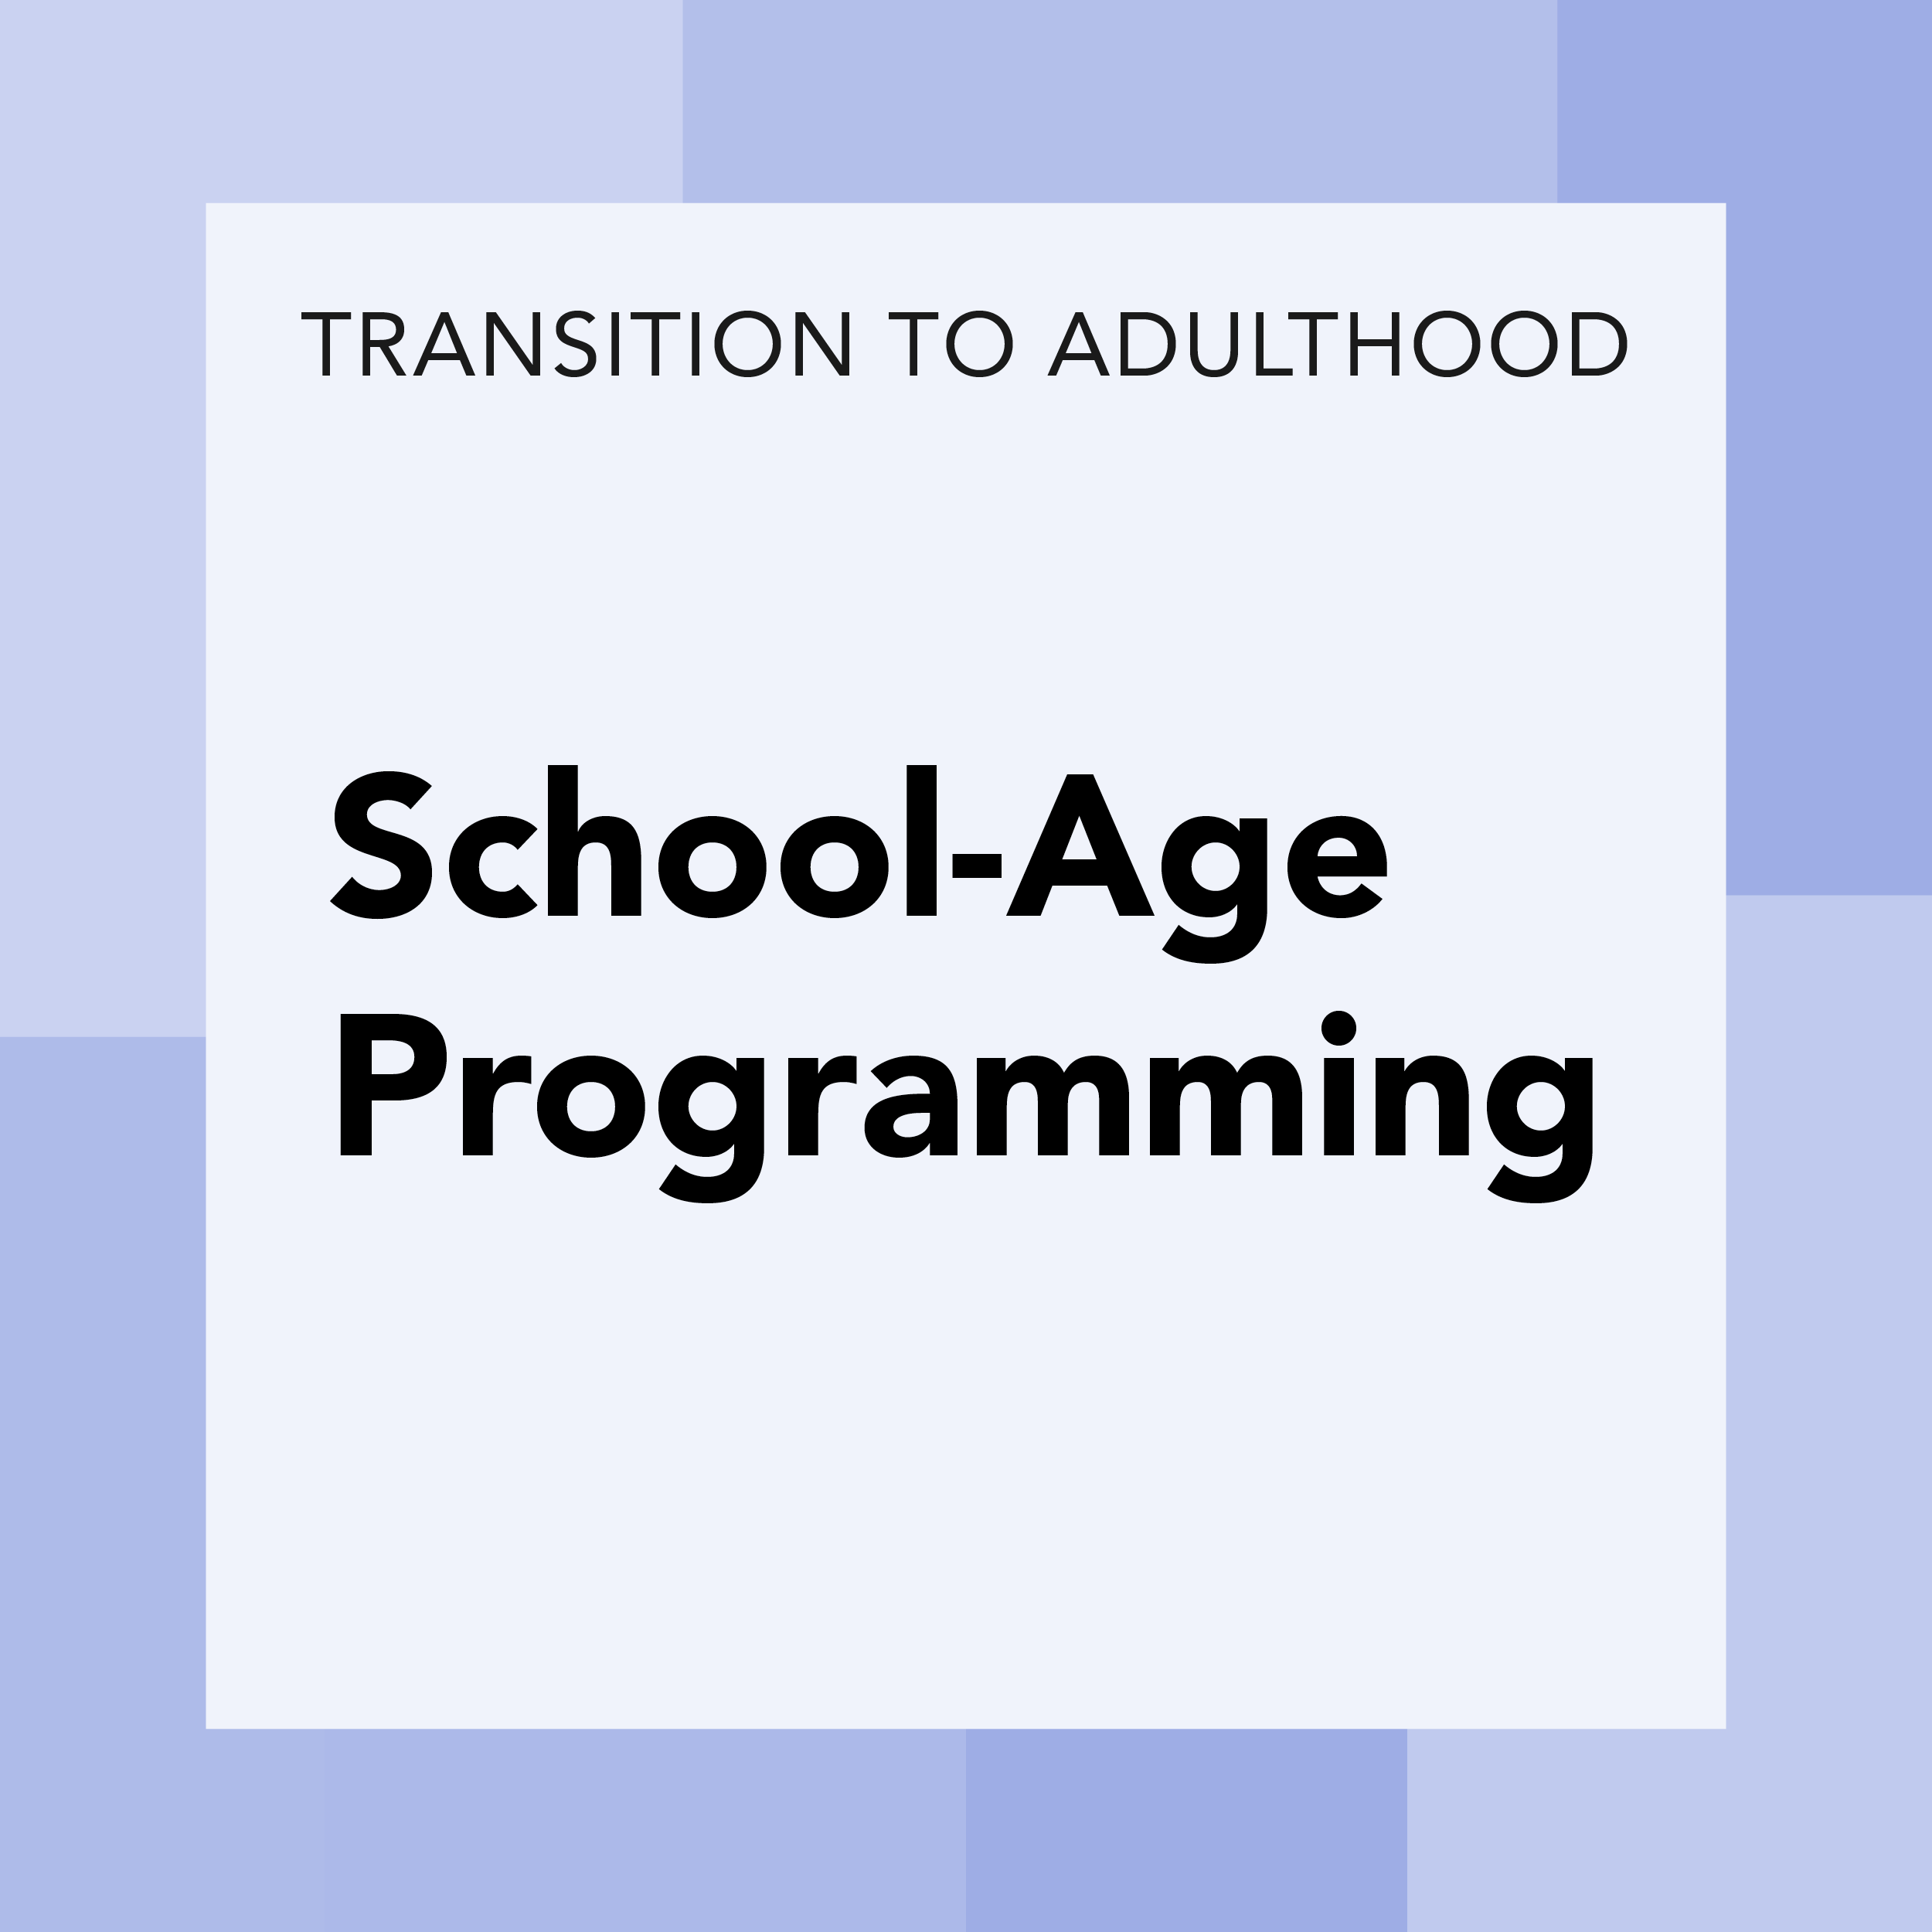 School-Age Programming